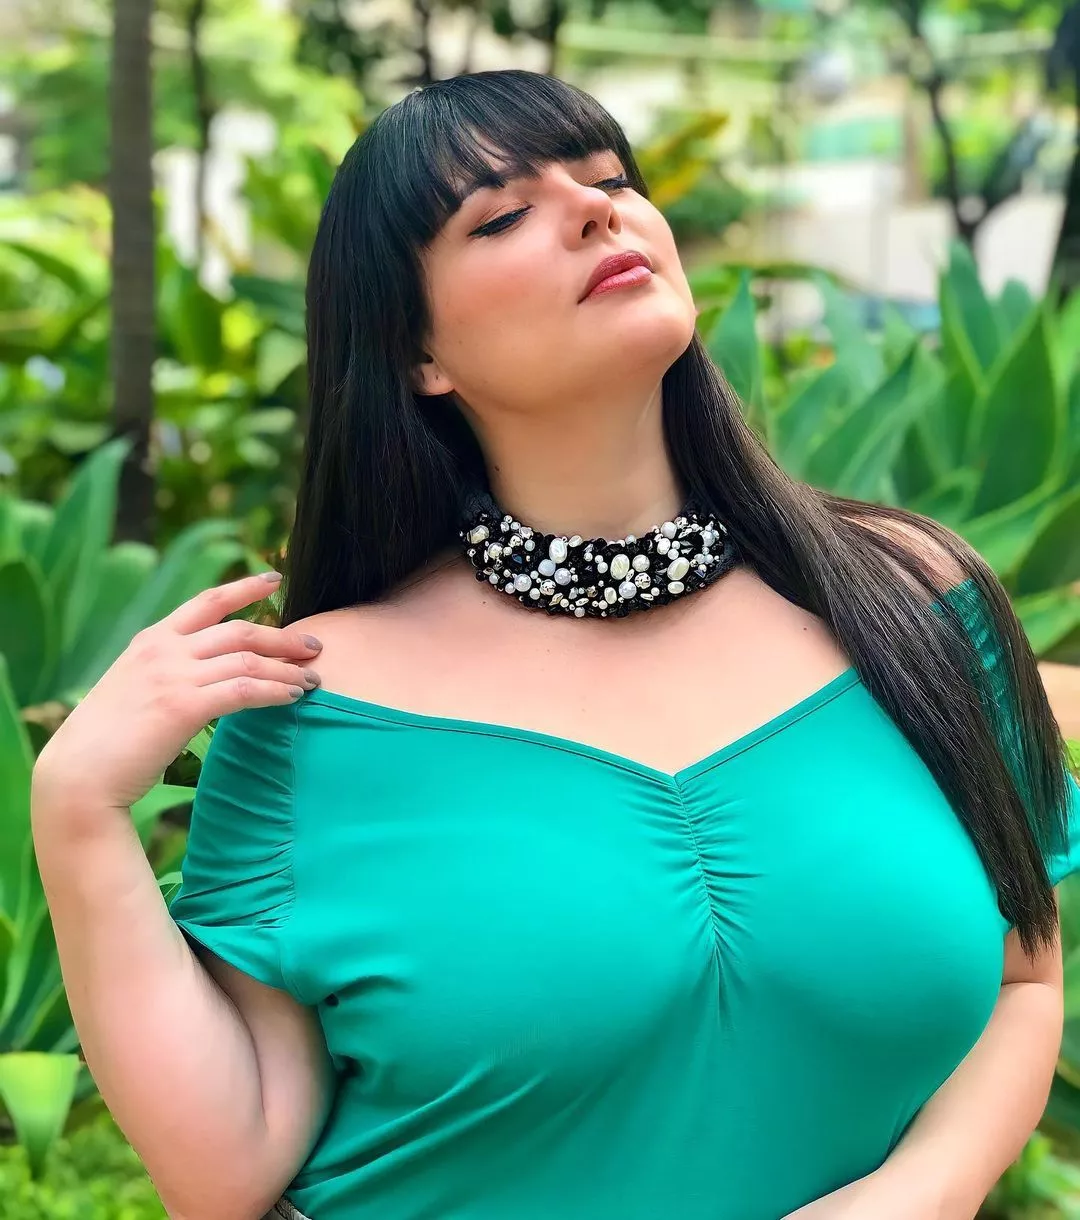 Marcela Baccarim bust, big boobs and lips